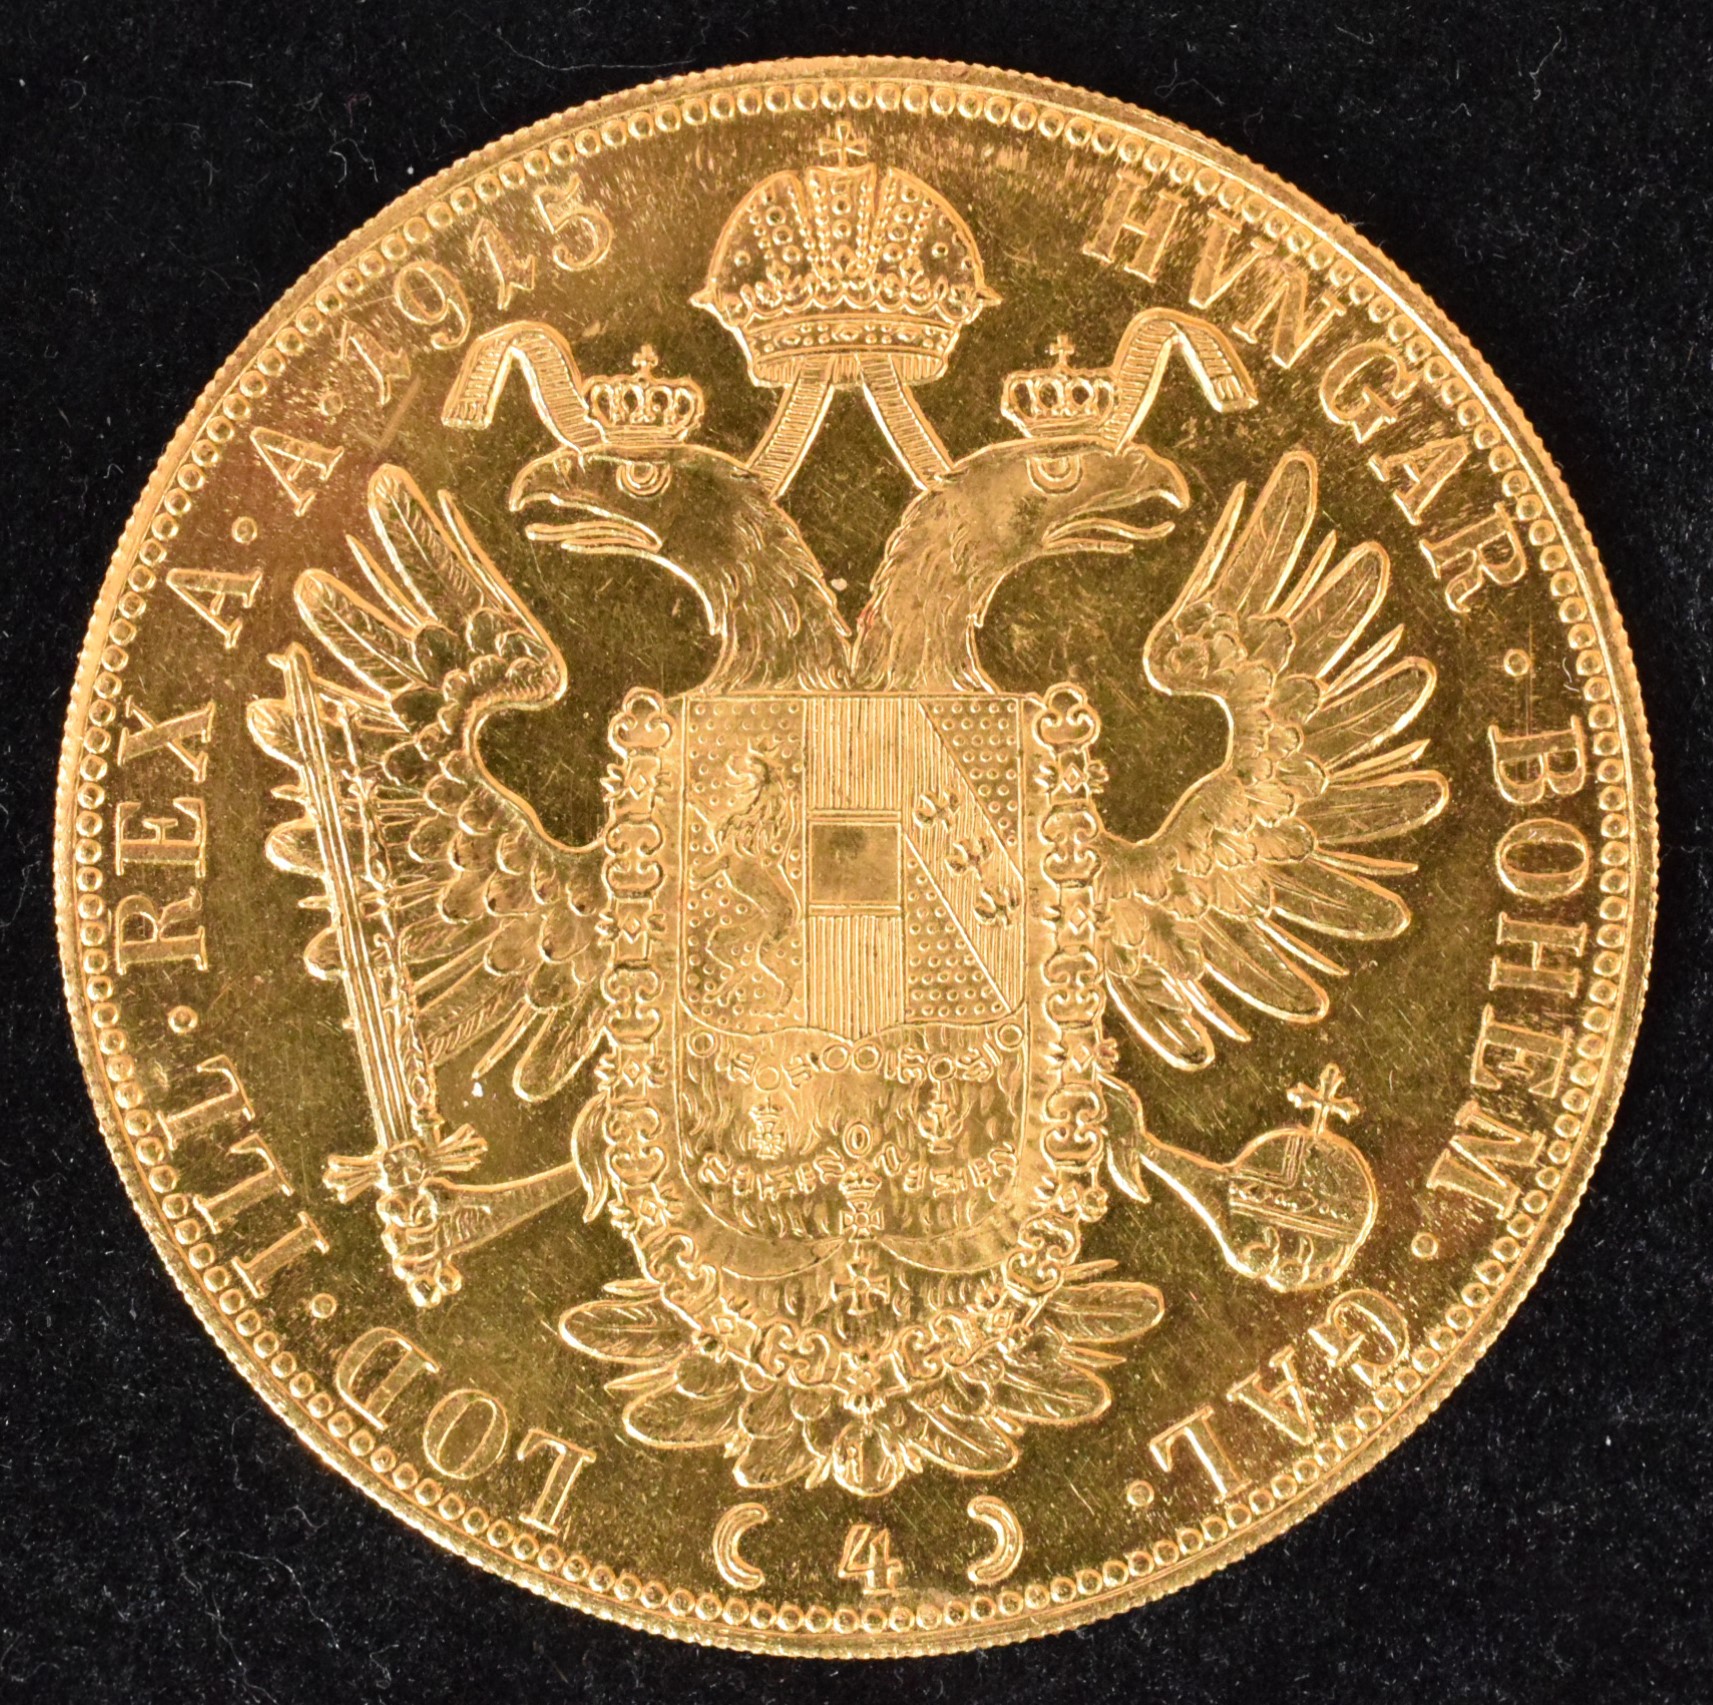 Austria, Franz Joseph I, 4 Ducats, 1915, Gold Restrike. - Image 2 of 2